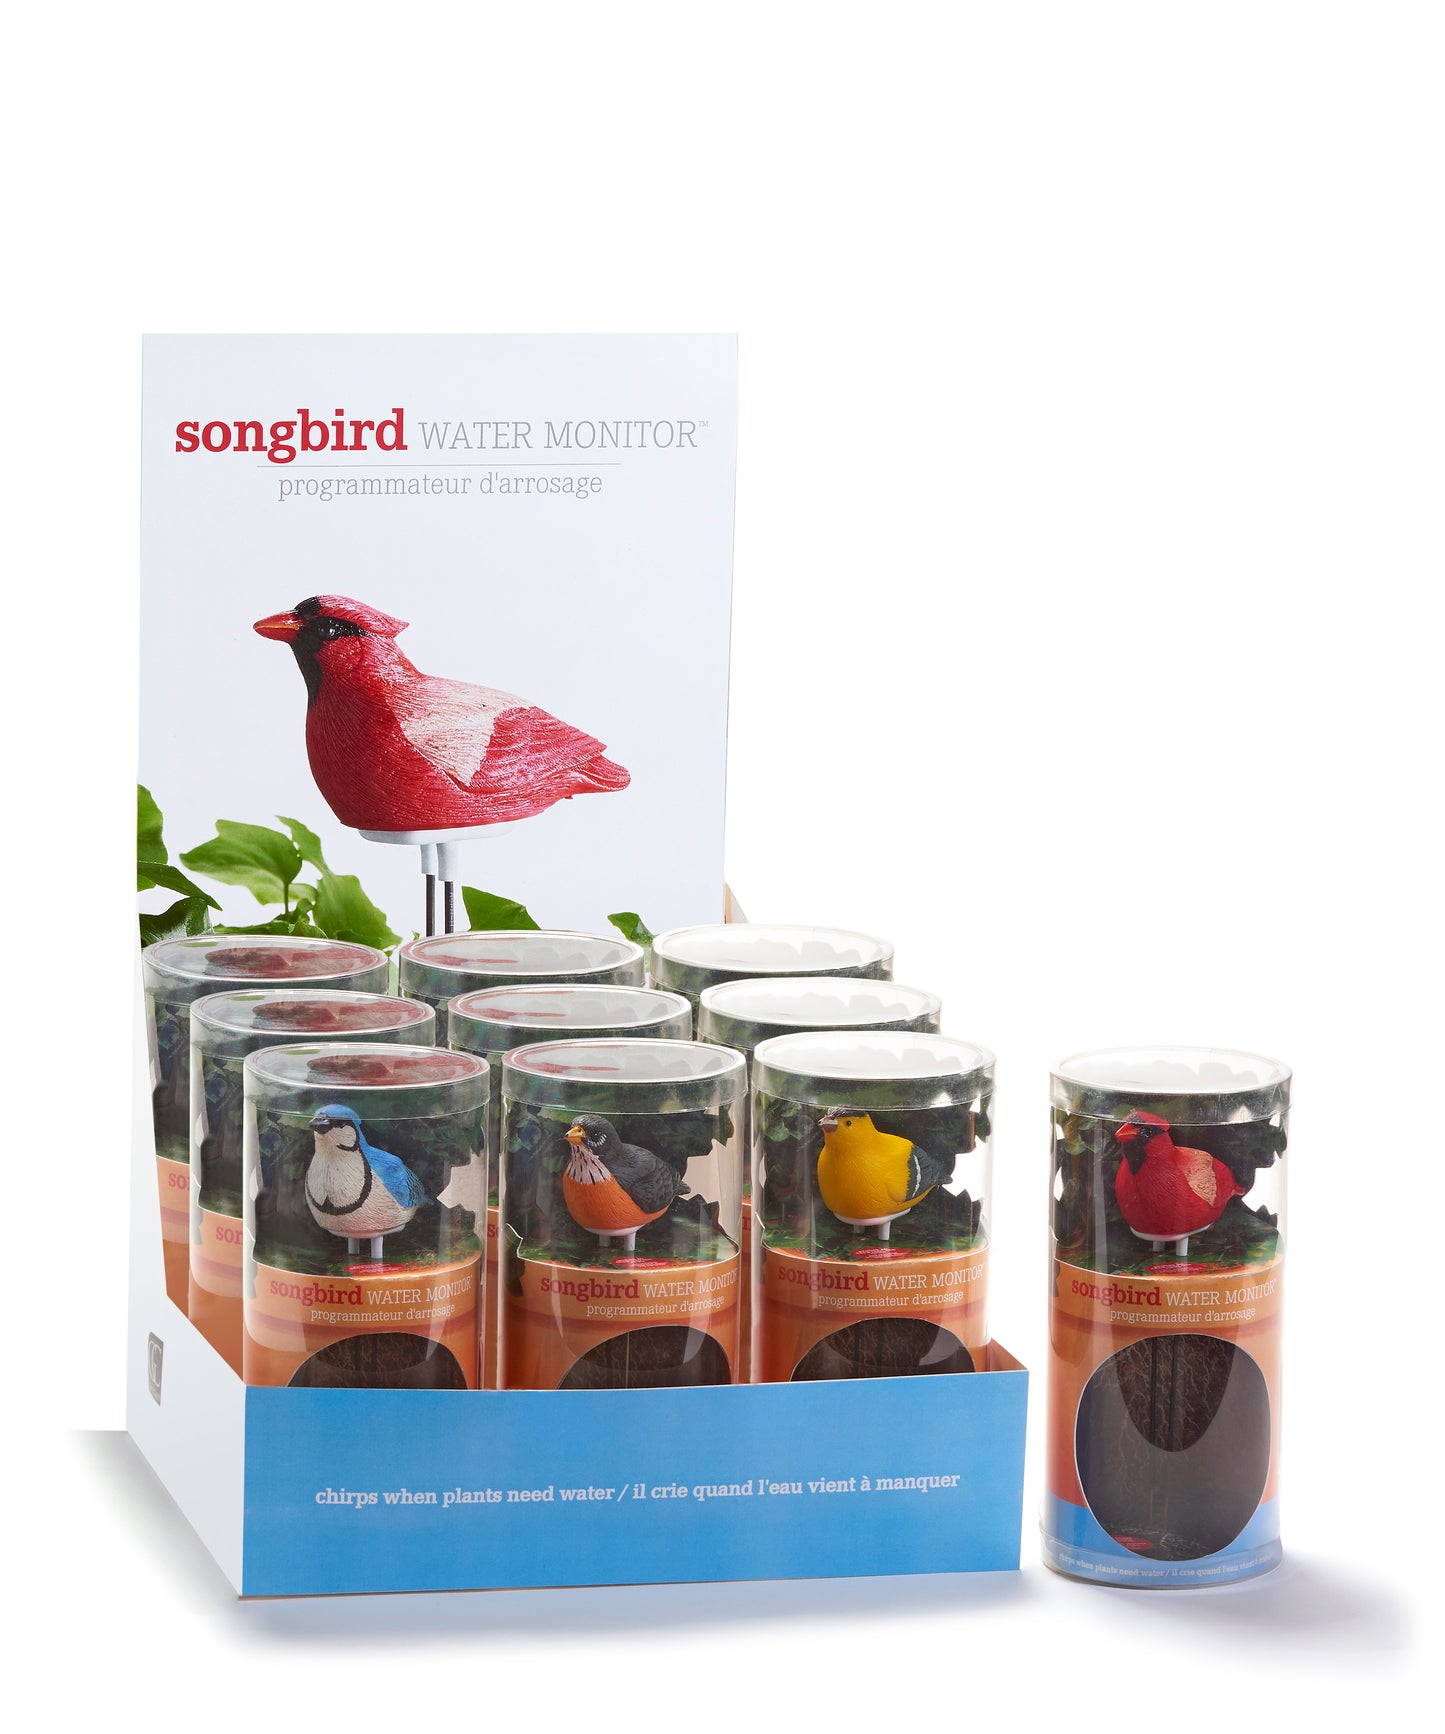 Songbird Moisture Meter with Light Sensor and Sound